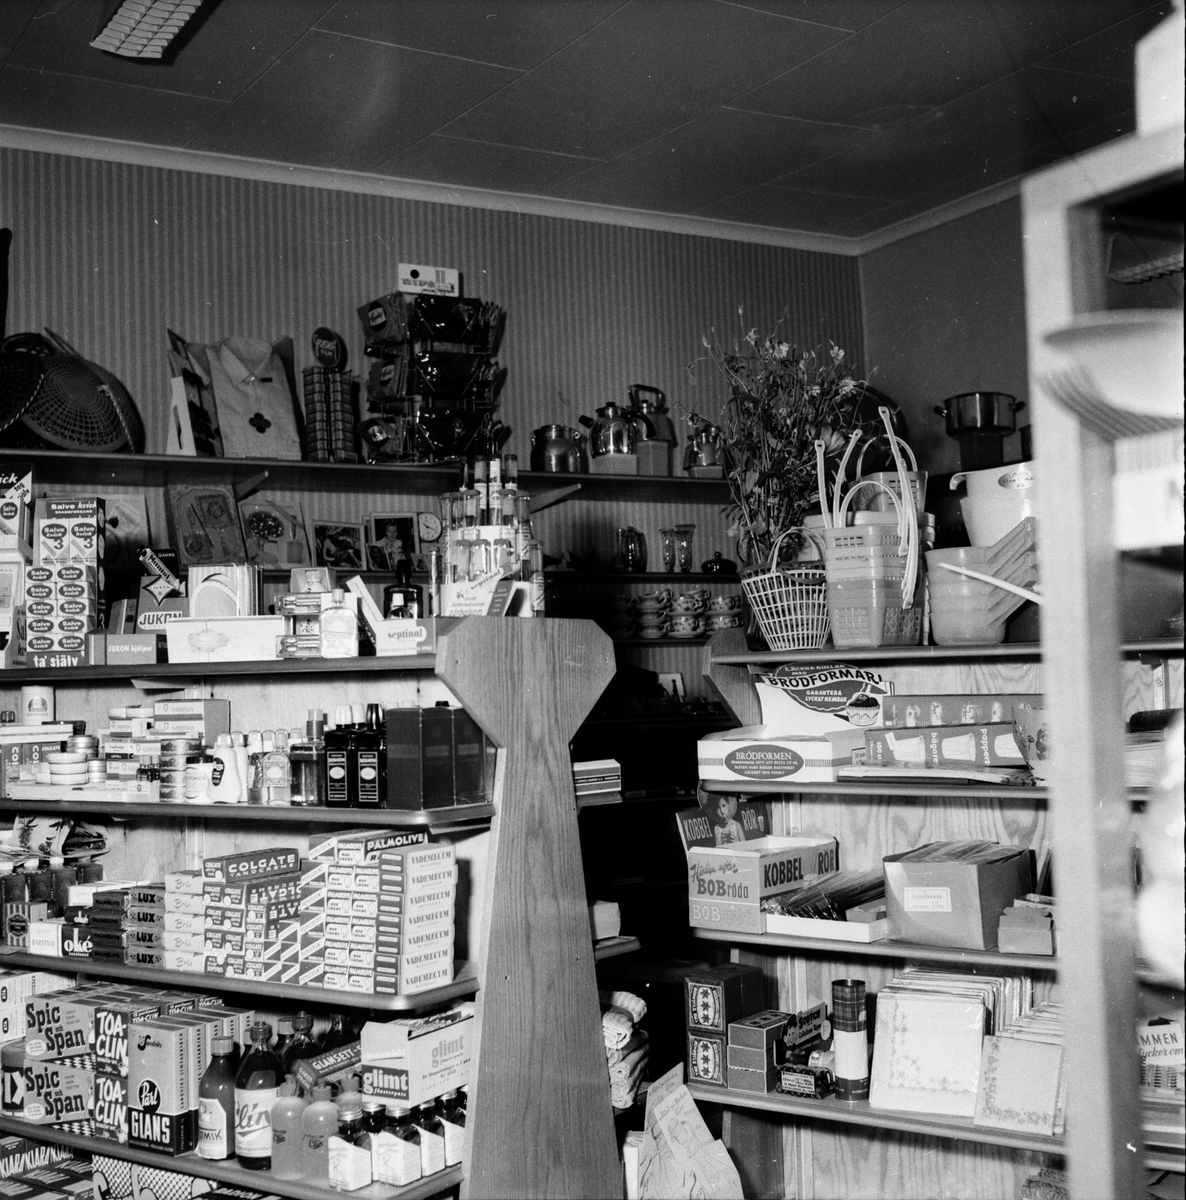 Hagbergs butik.
Skog, Stråtjära 10/7 1958